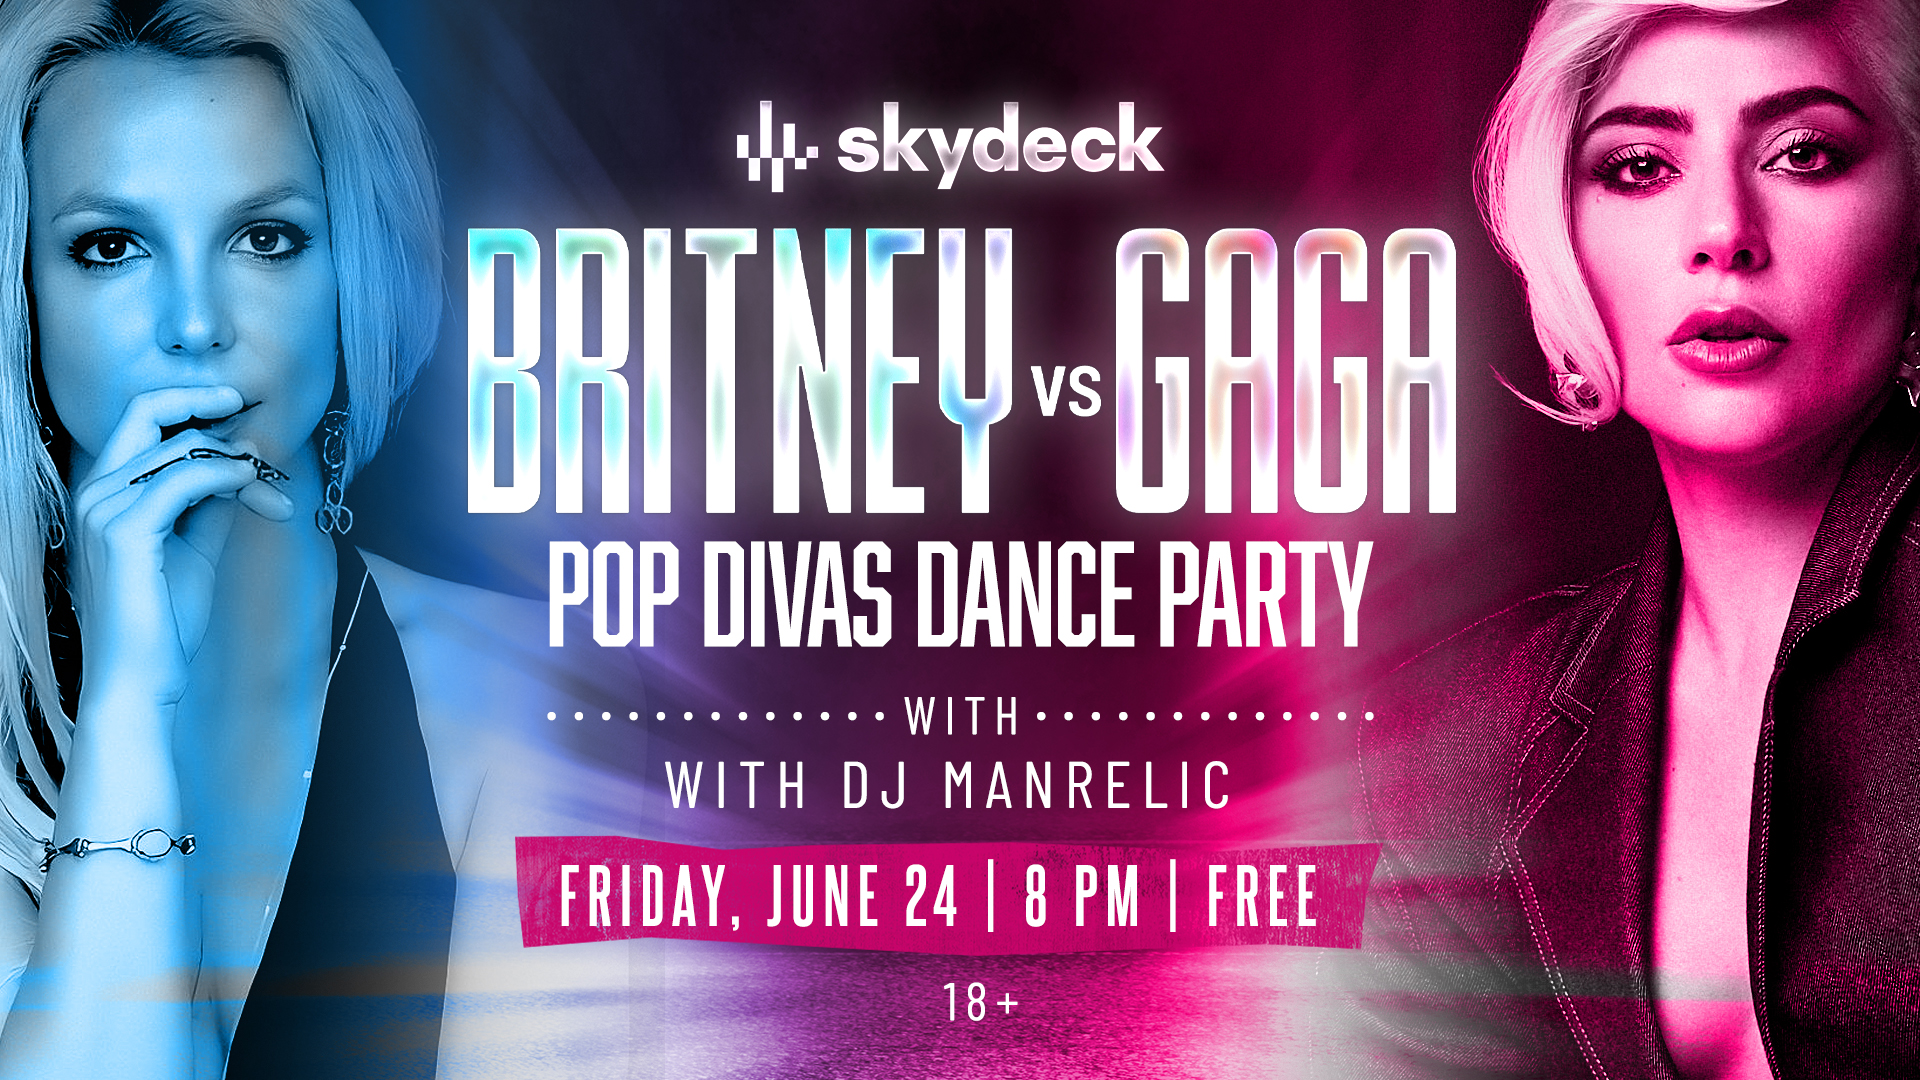 Britney vs. Gaga Pop Divas Dance Party - hero